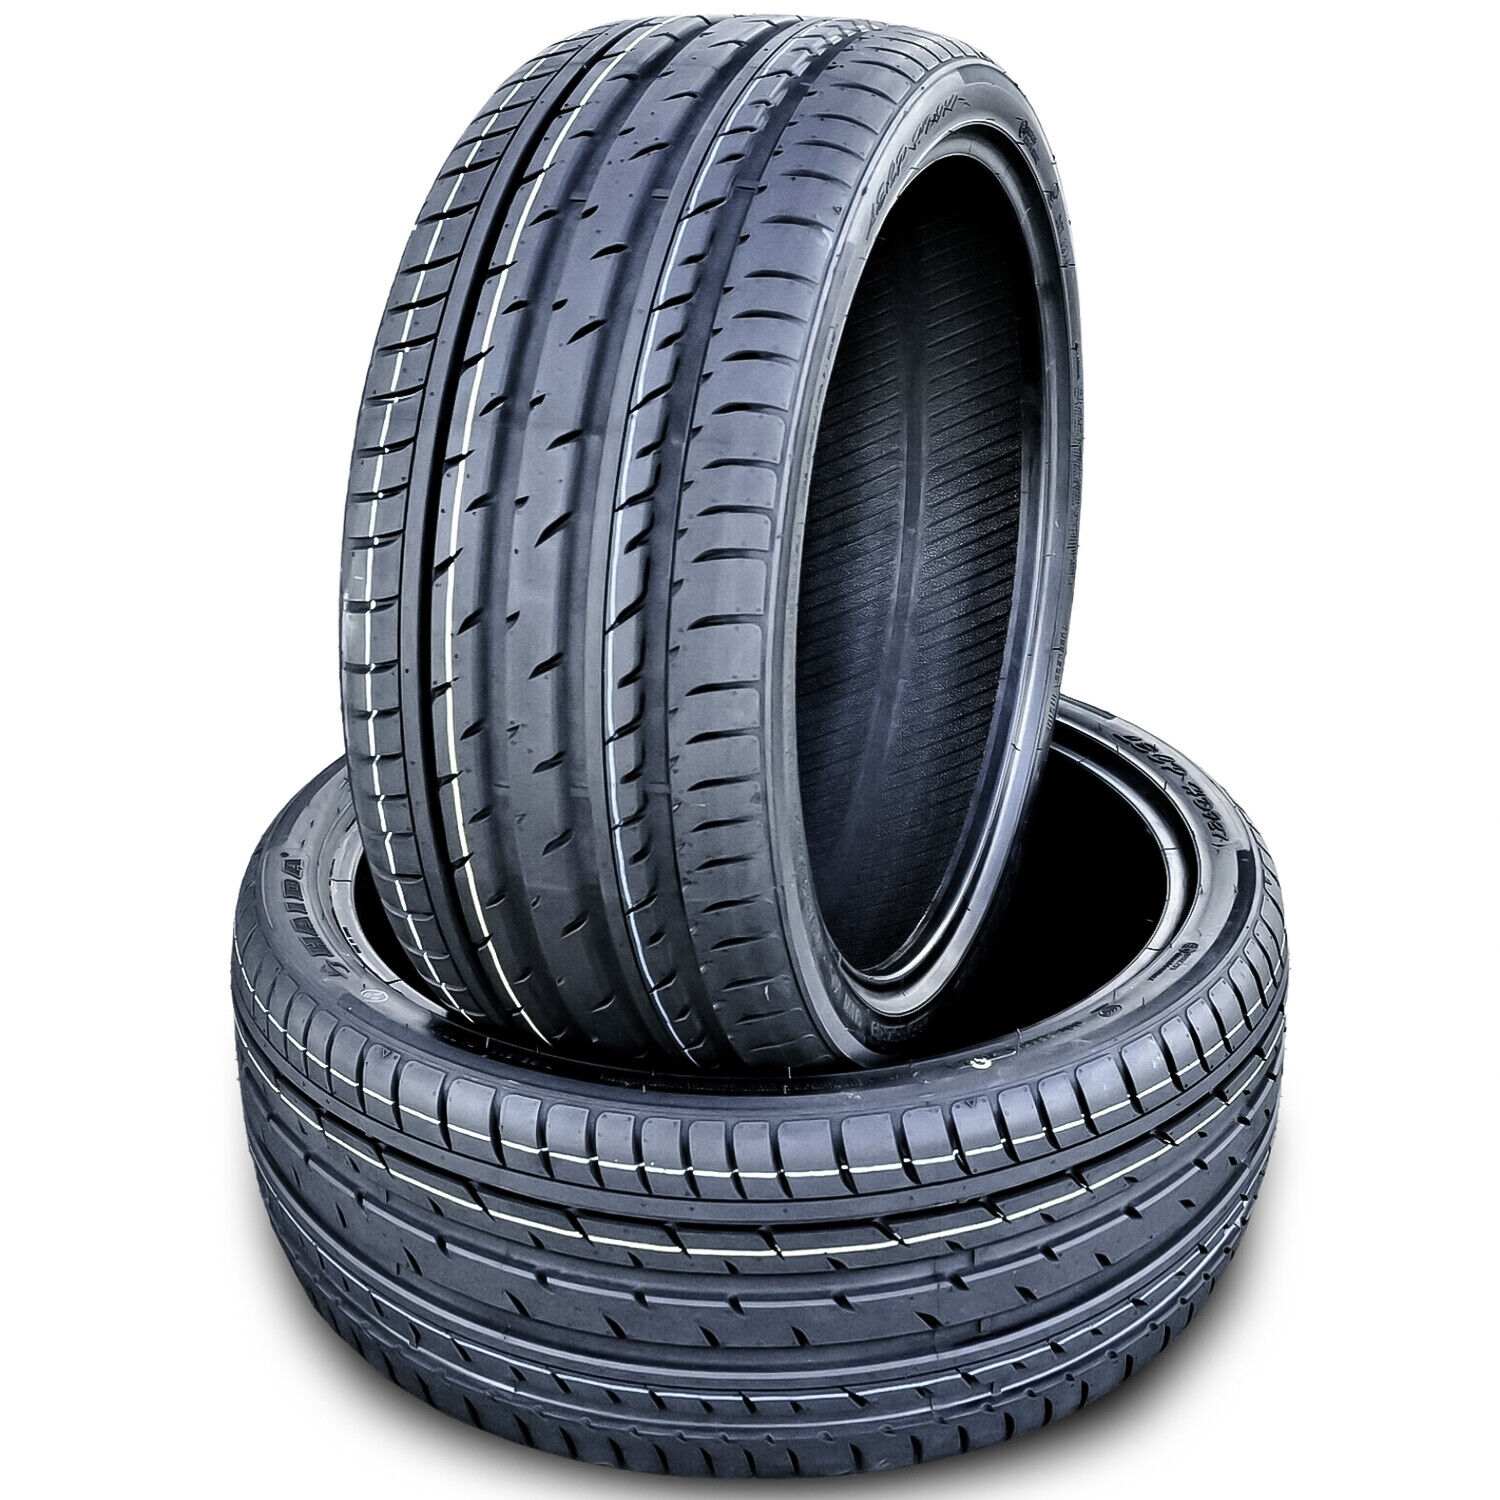 2 Tires Haida LECP HD927 265/30ZR19 265/30R19 93W XL High Performance